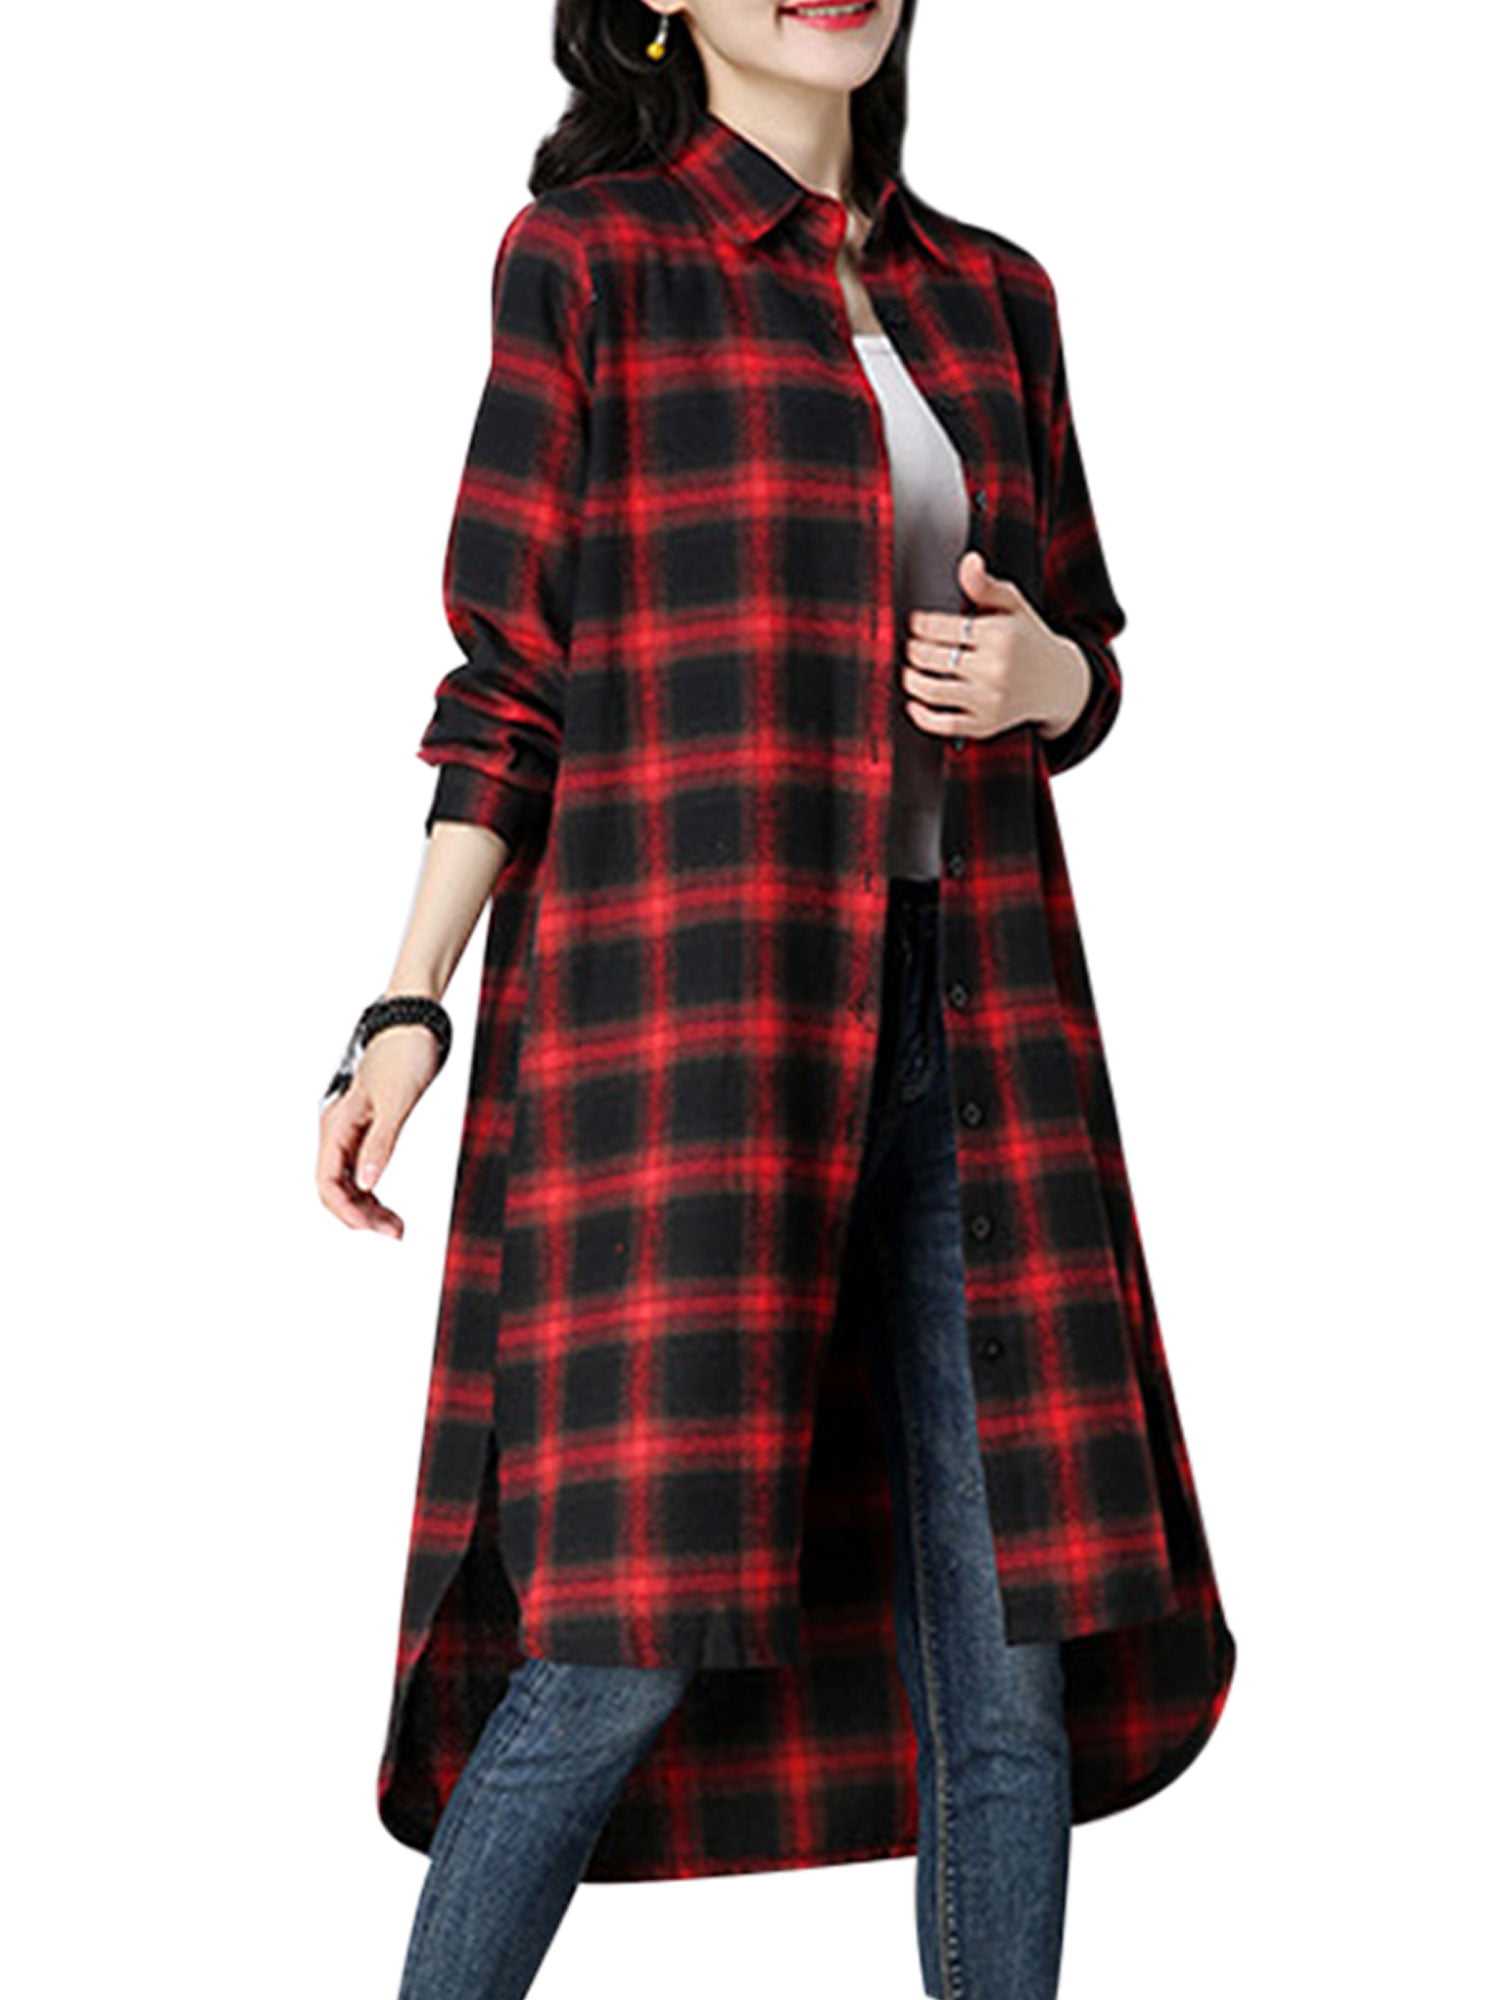 Women Coat,JKRED Womens Turtleneck Tops Plaid Shirts Tunic Long Sleeve Pullover Sweatshirt